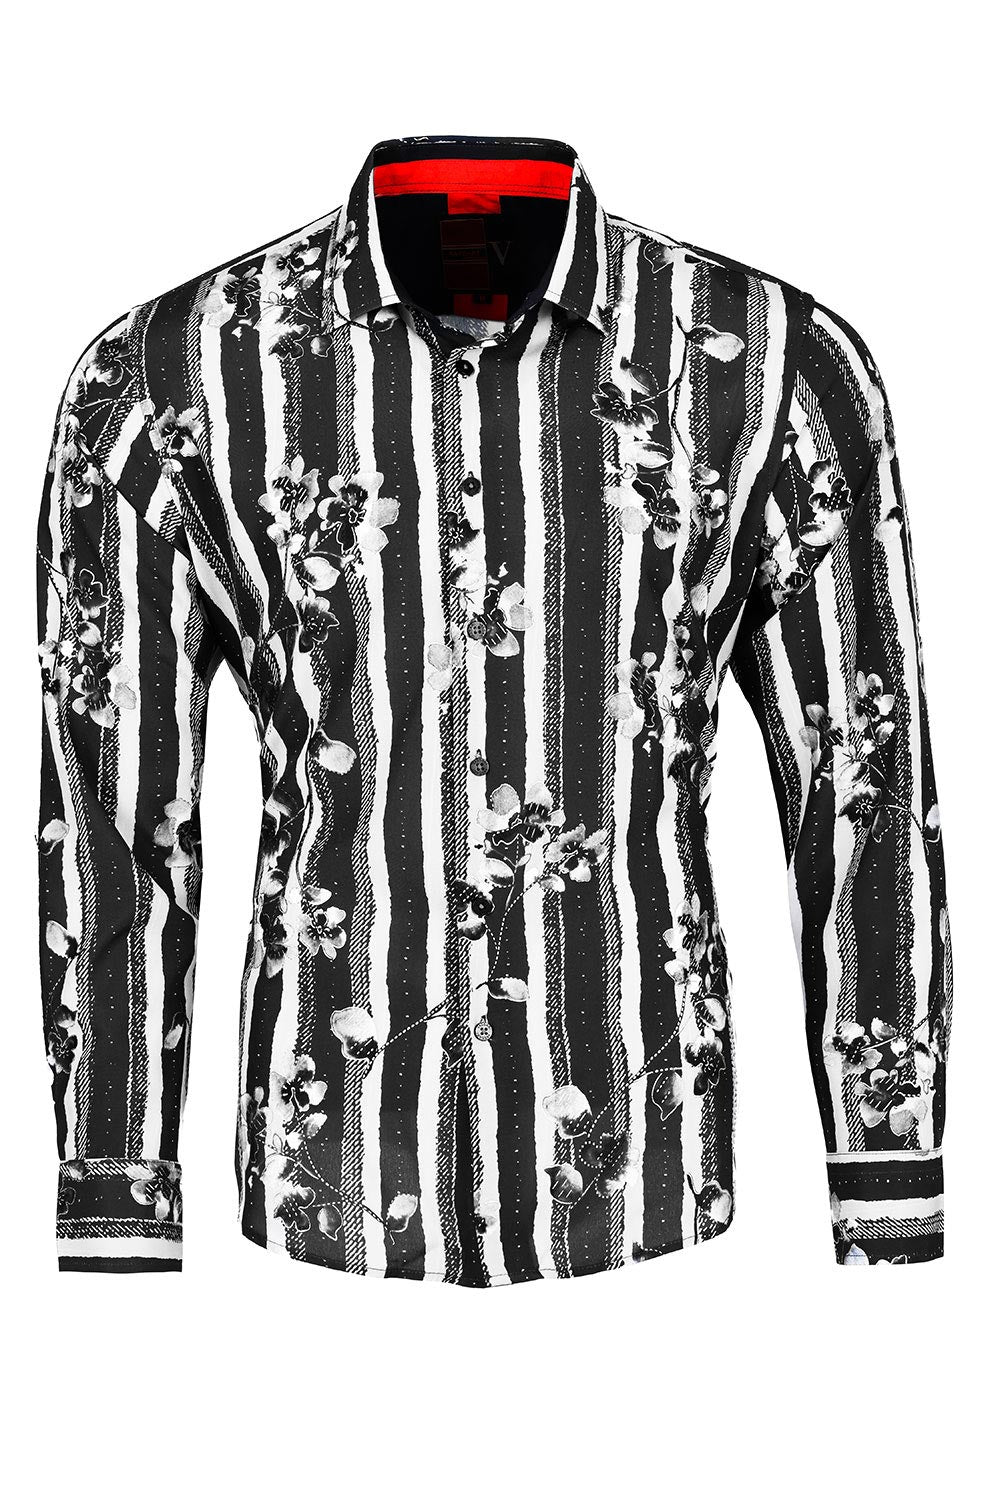 Vassari Men's Printed Striped Floral Long Sleeve Shirts 2VS122 Black